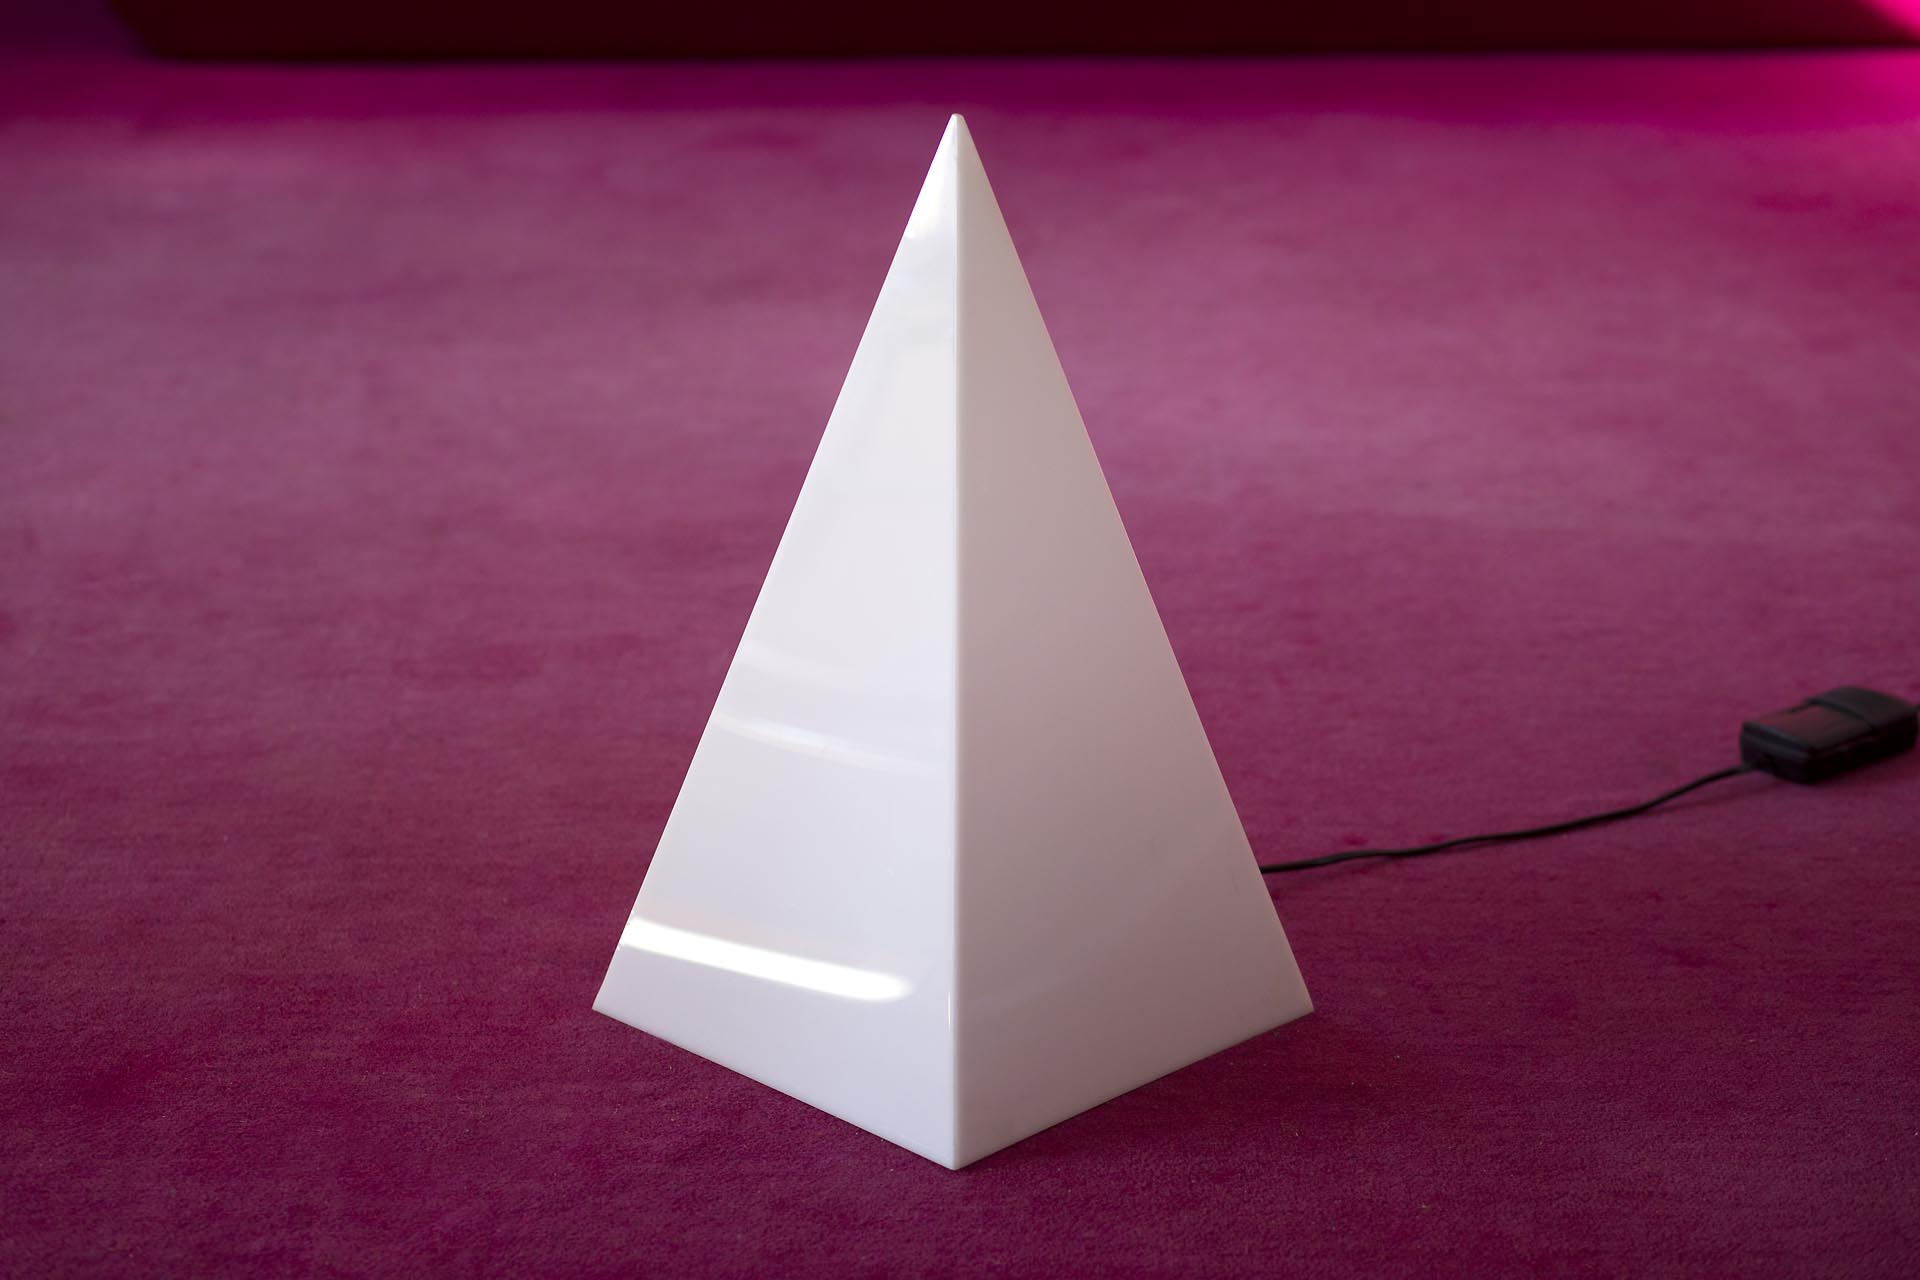 1991 Pyramid prototype lamp